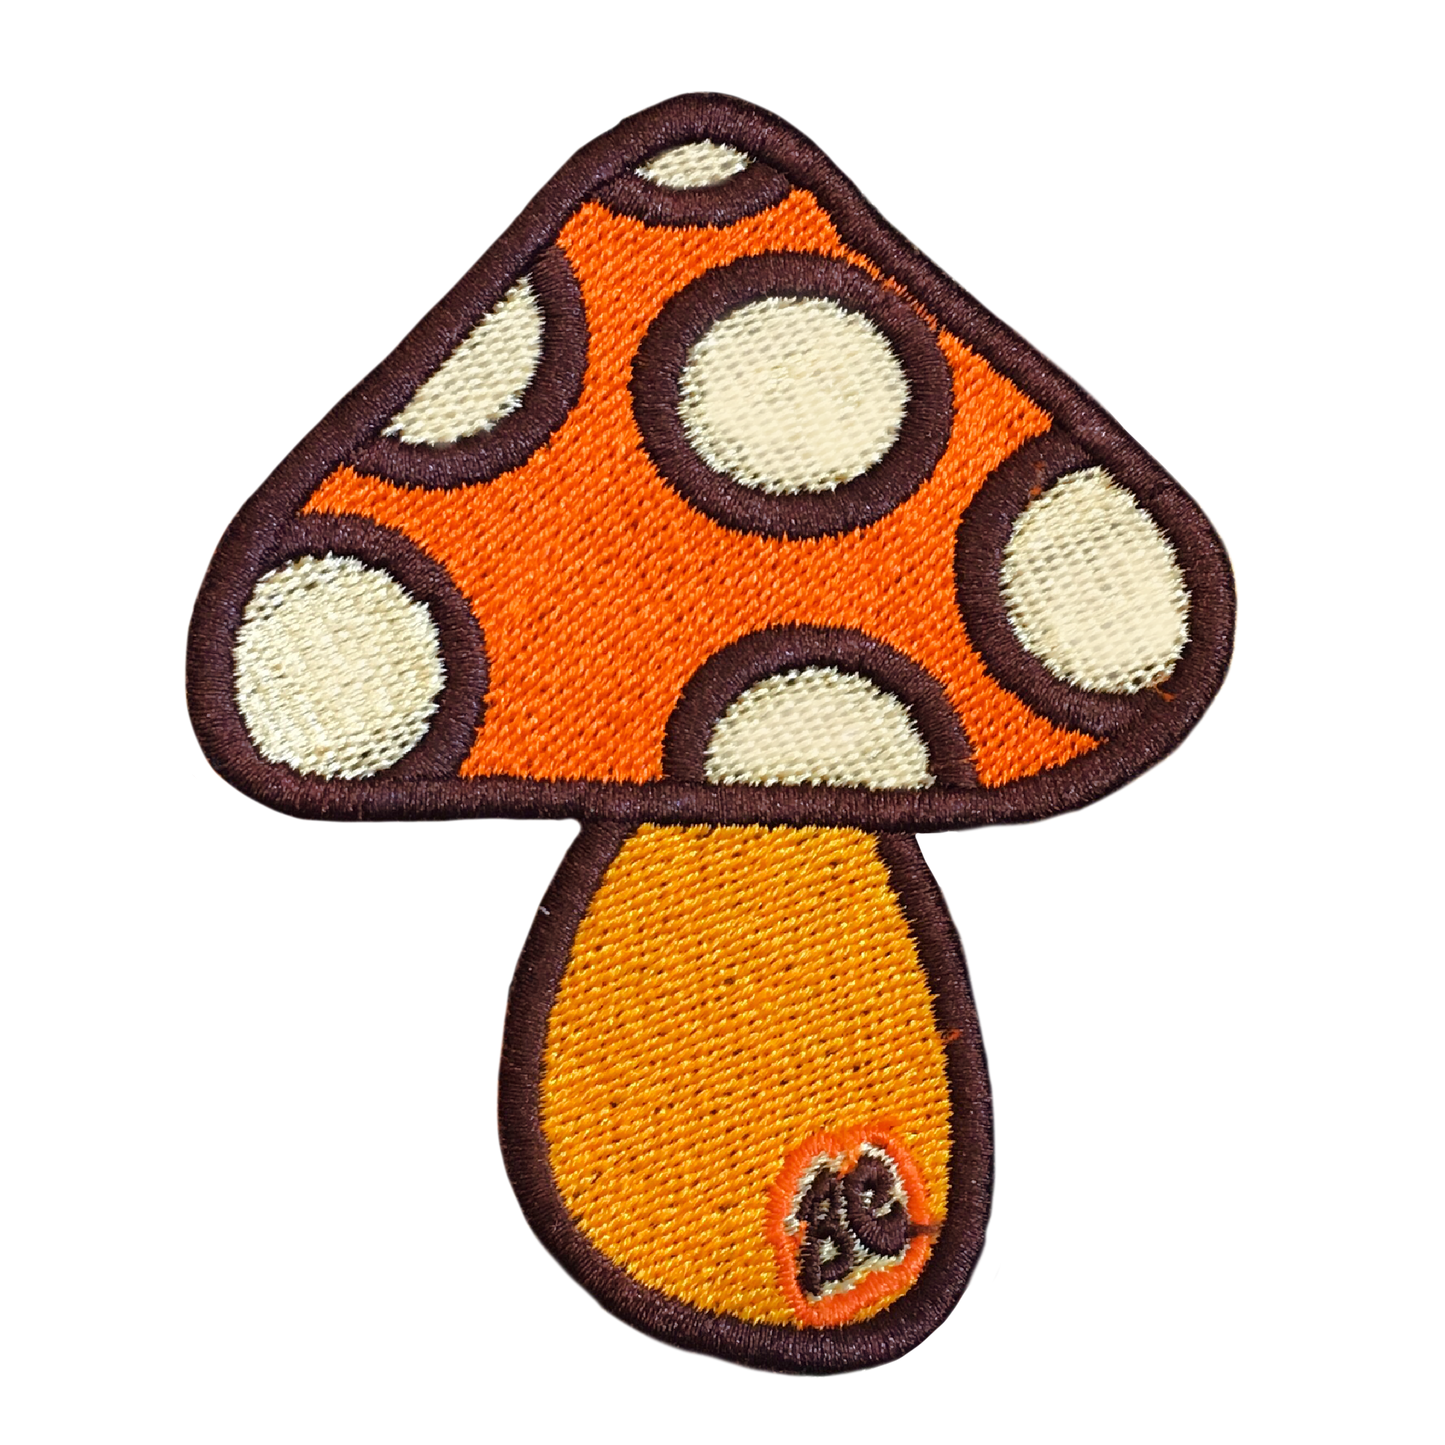 The Mushroom Patch